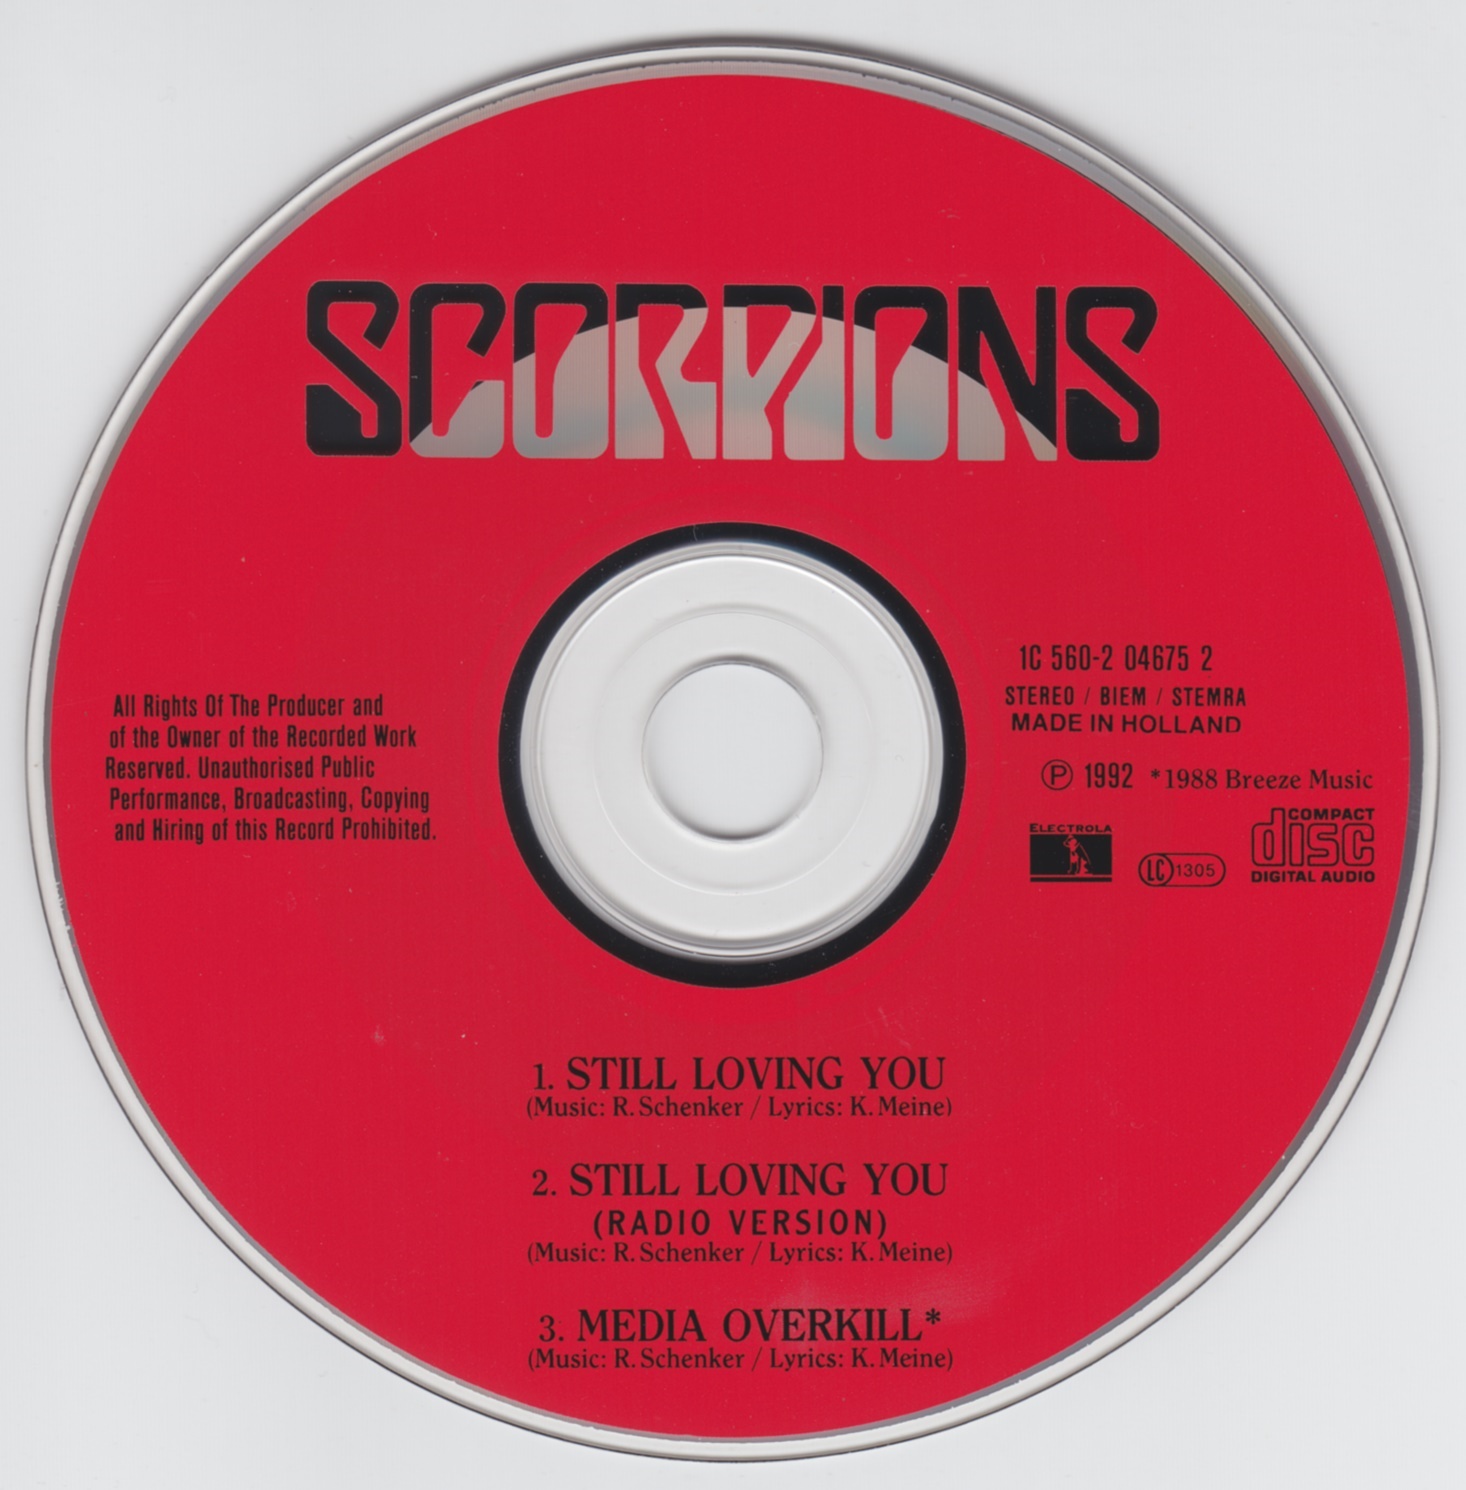 L still loving you. Scorpions альбом 1992. Scorpions "still loving you" 1992 обложка. Обложка альбома Scorpions--1992-still loving. Scorpions still loving you 1992 обложка альбома.